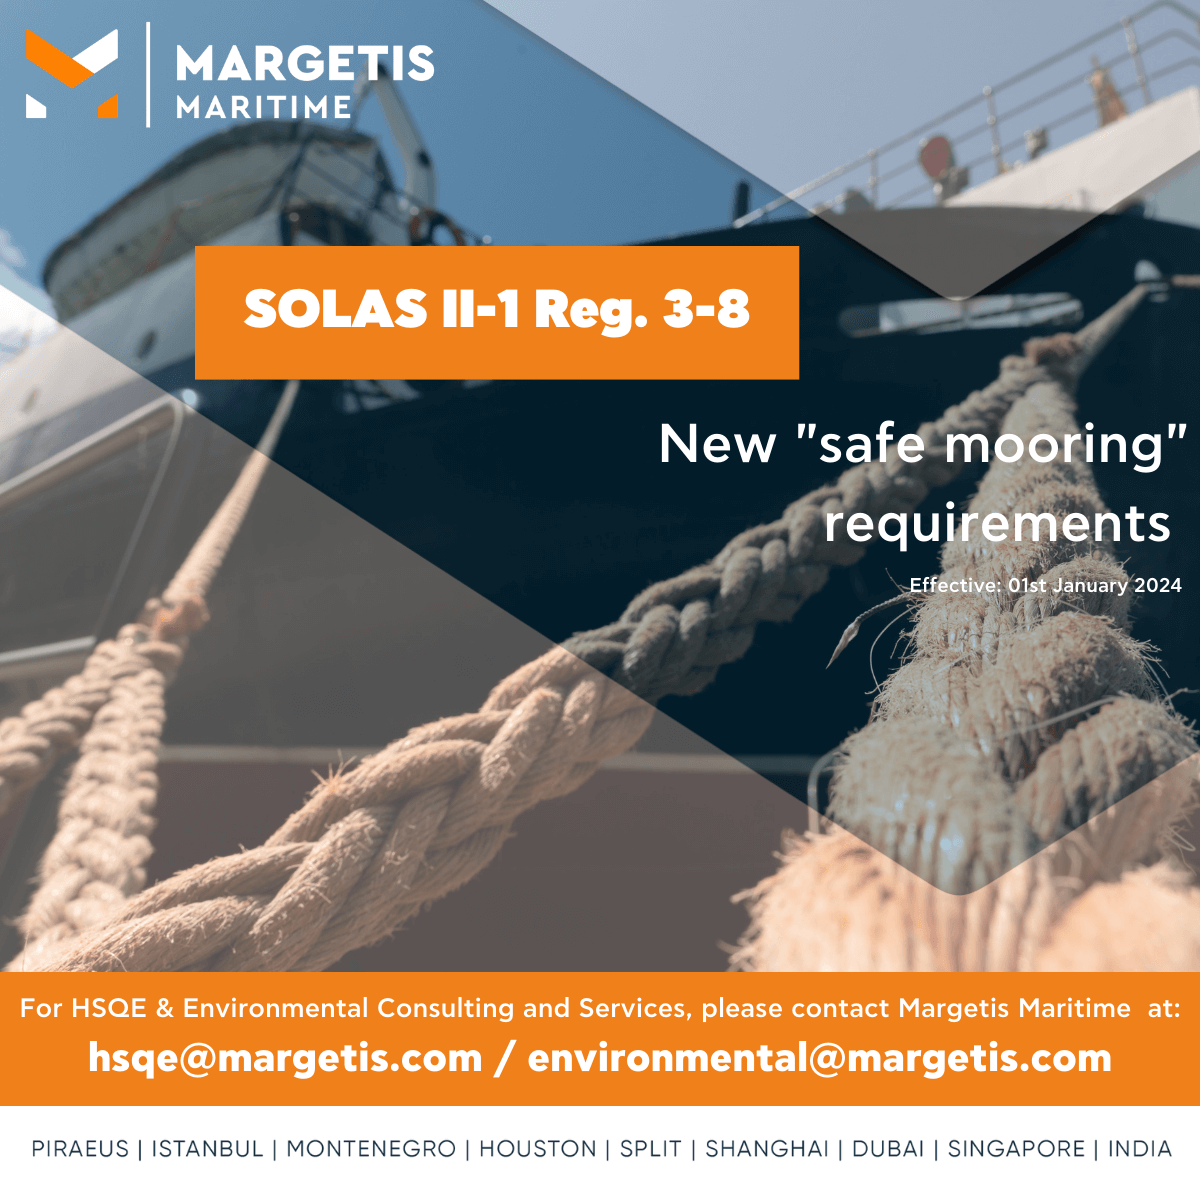 SOLAS II-1 Reg. 3-8 new "safe mooring" requirements